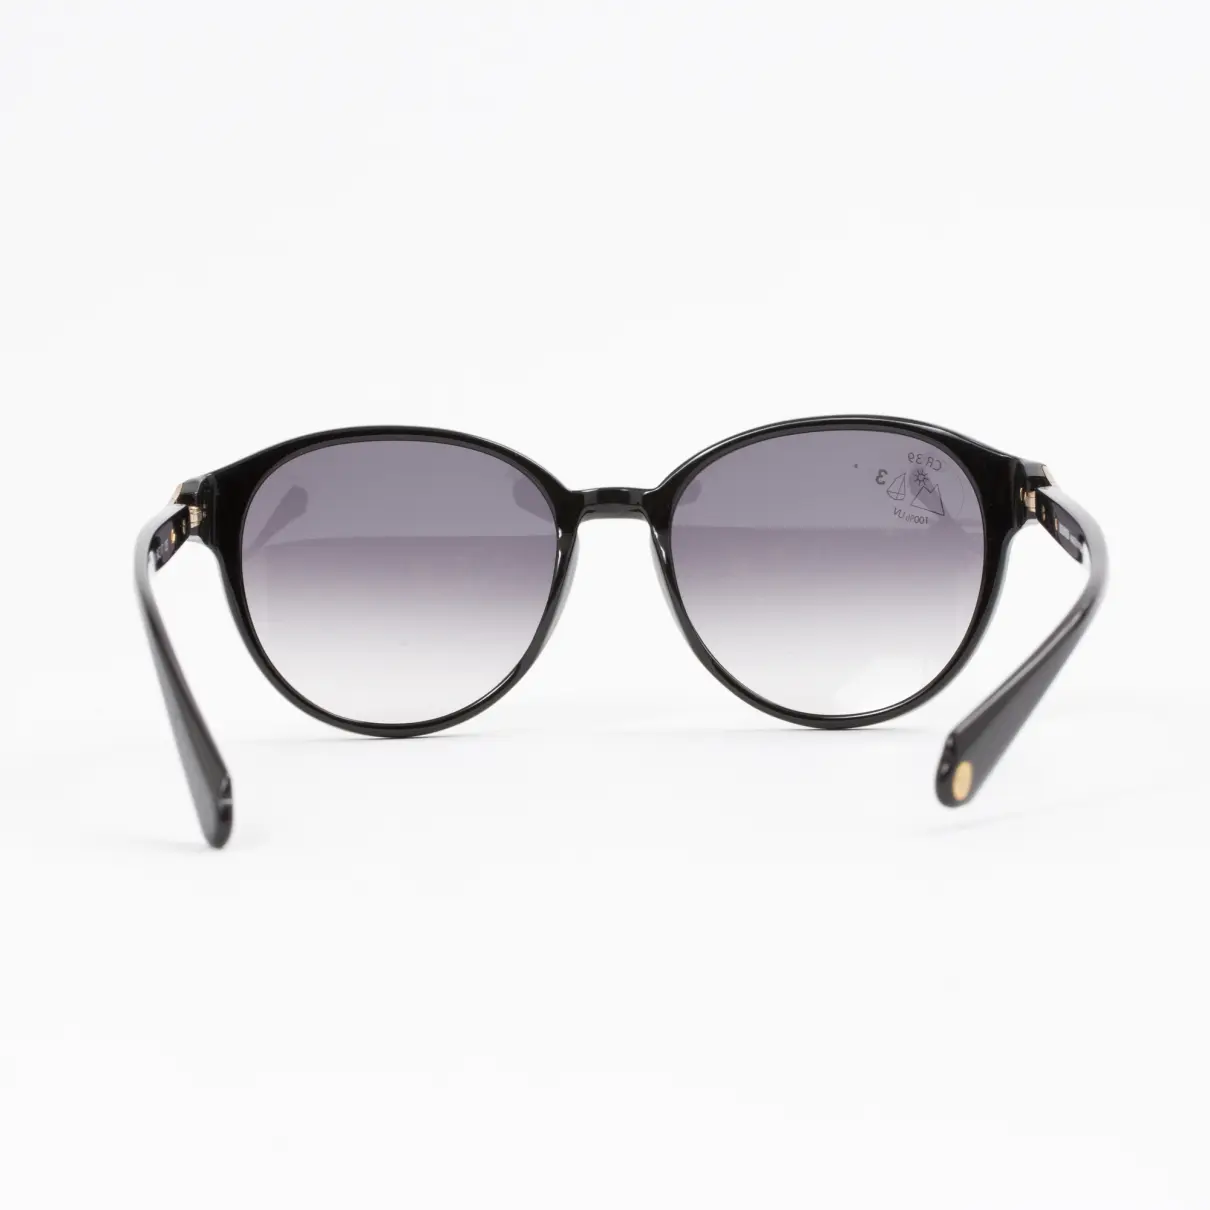 Buy Balmain Sunglasses online